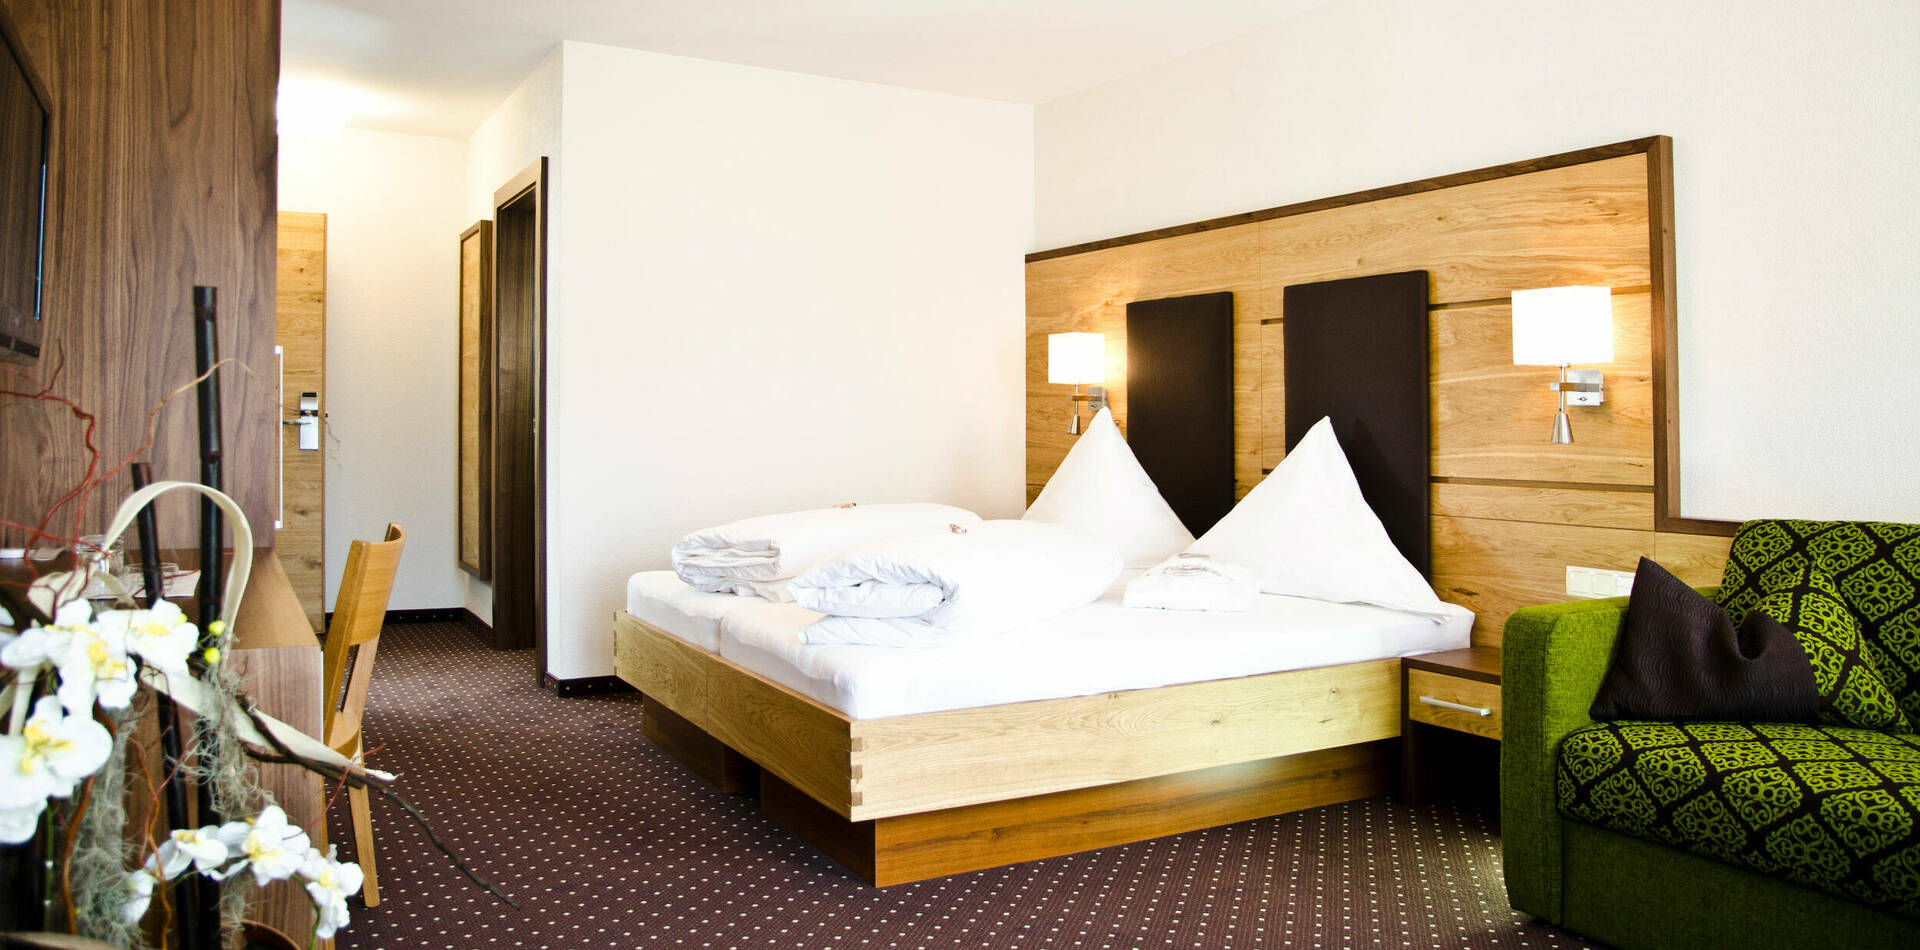 Rooms in the hotel – Garni Arosa in Ischgl 